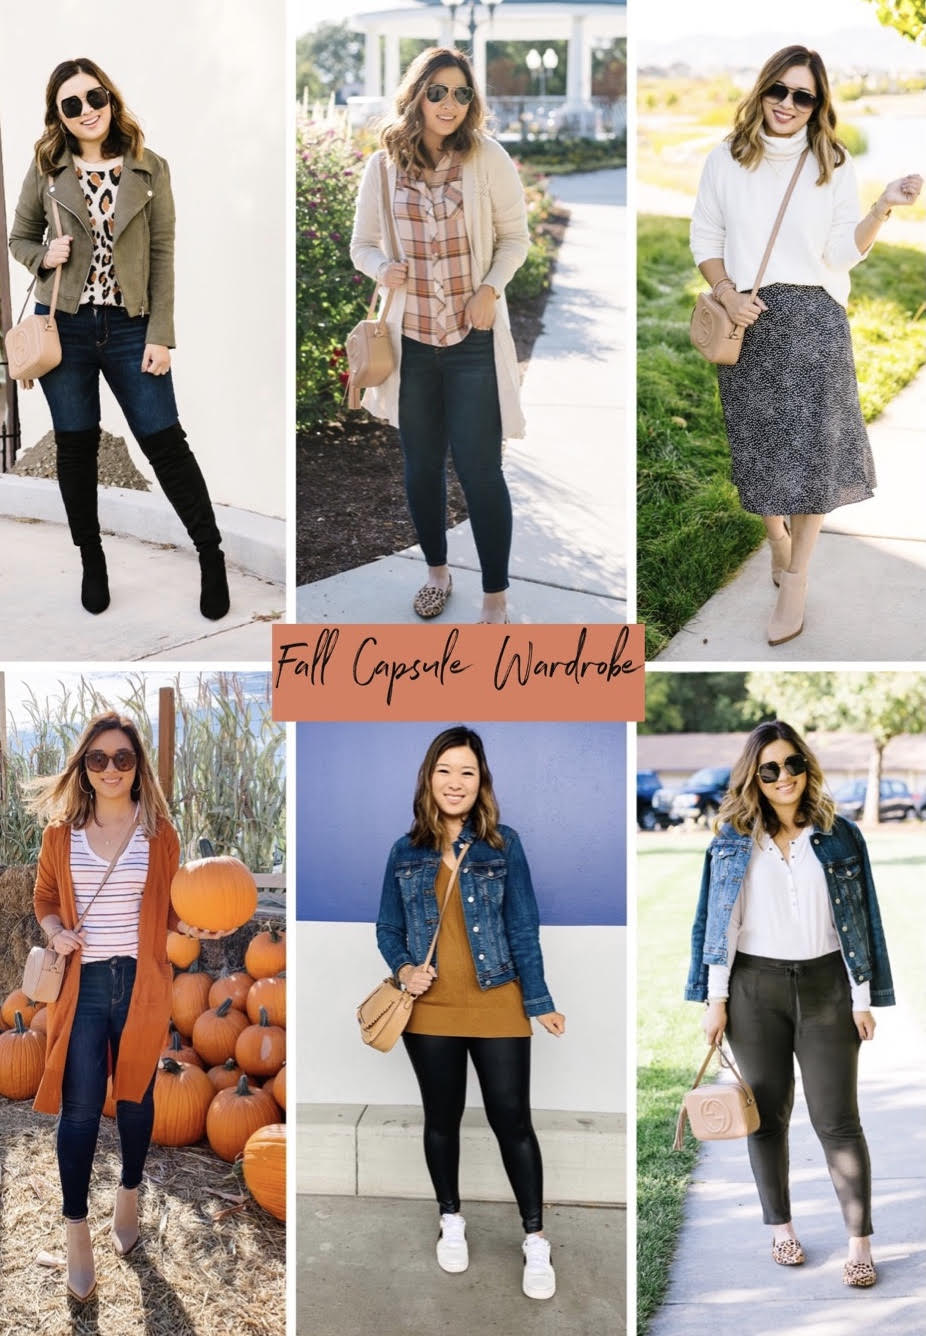 Women's Fall Capsule Wardrobe: 20 Pieces, 20+ Ways | SandyALaMode